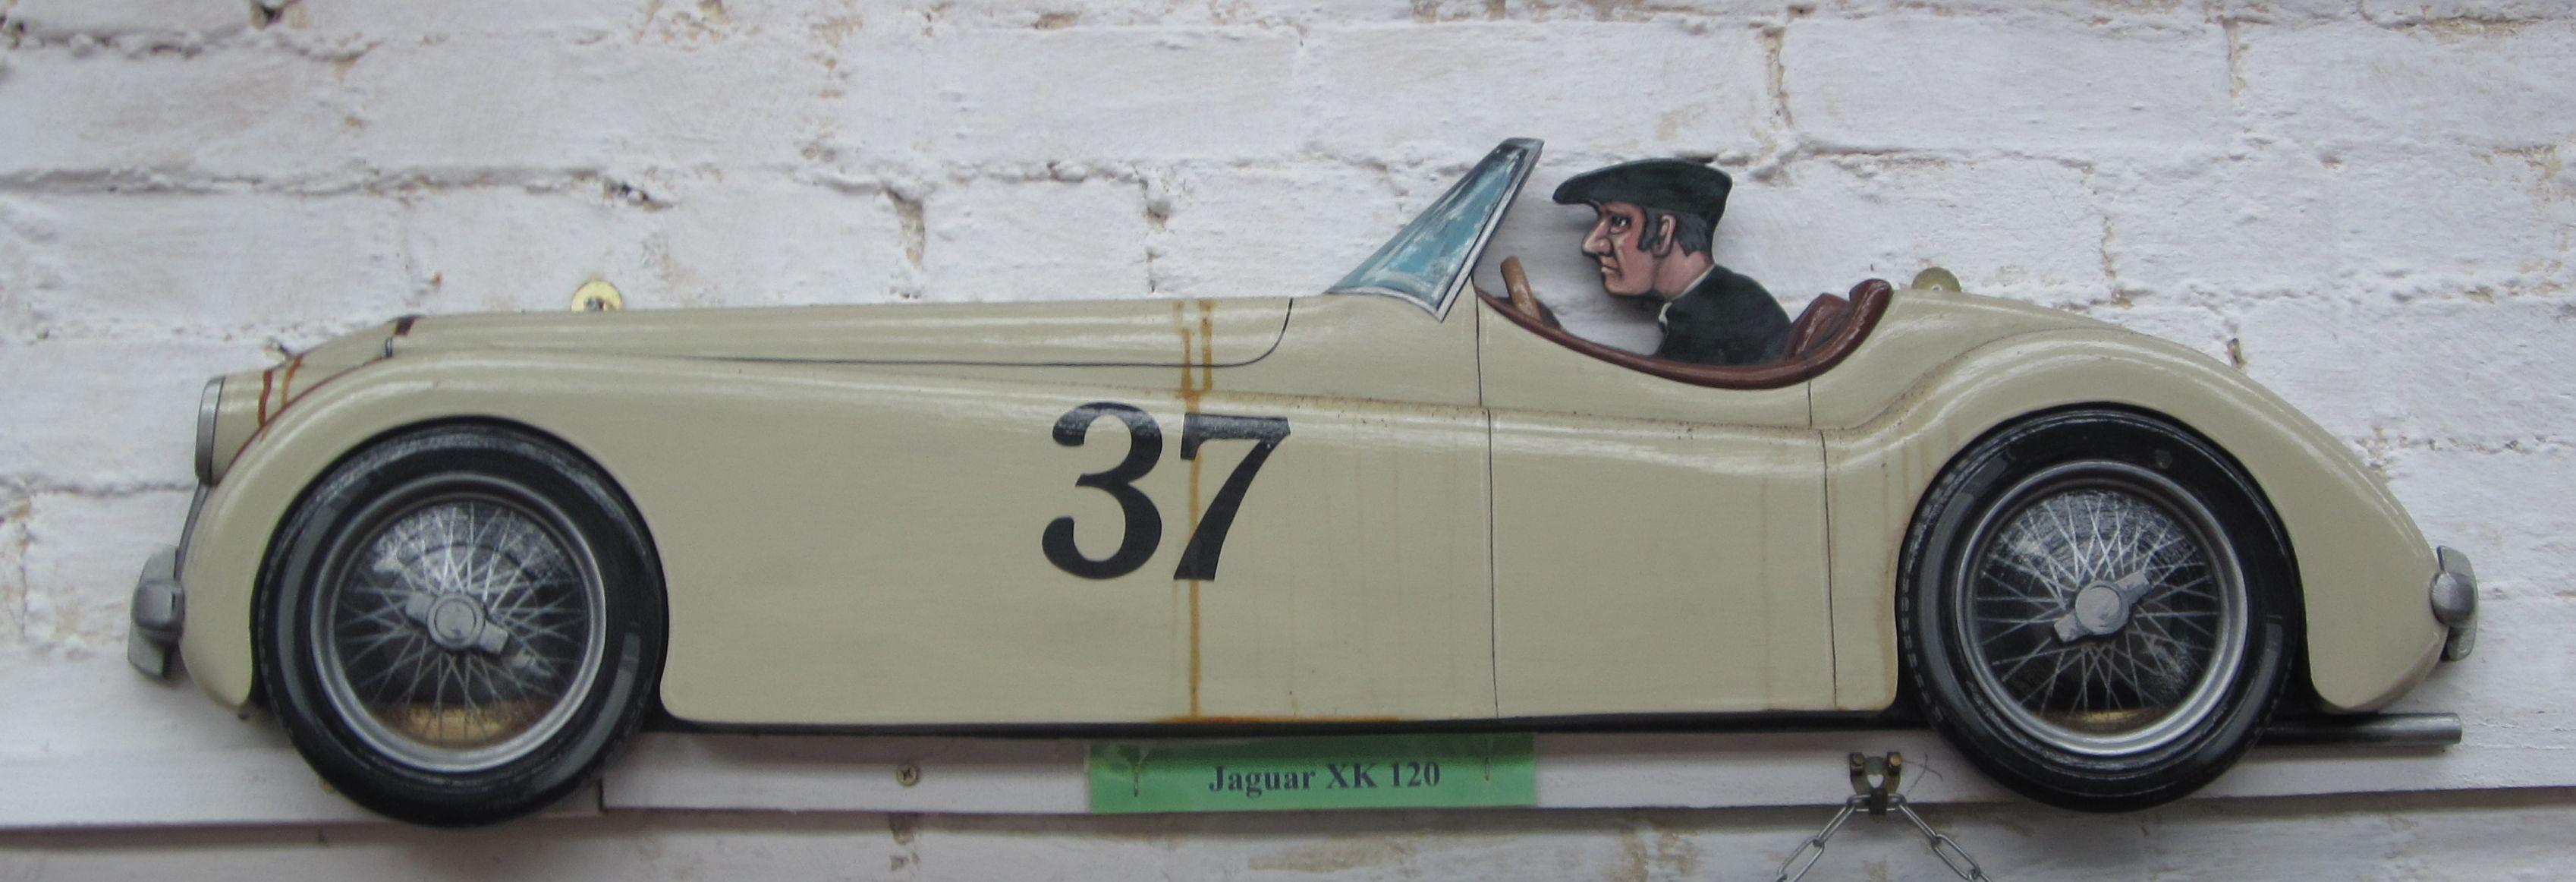 Bonhams Cars : A Jaguar XK120 wooden car profile,